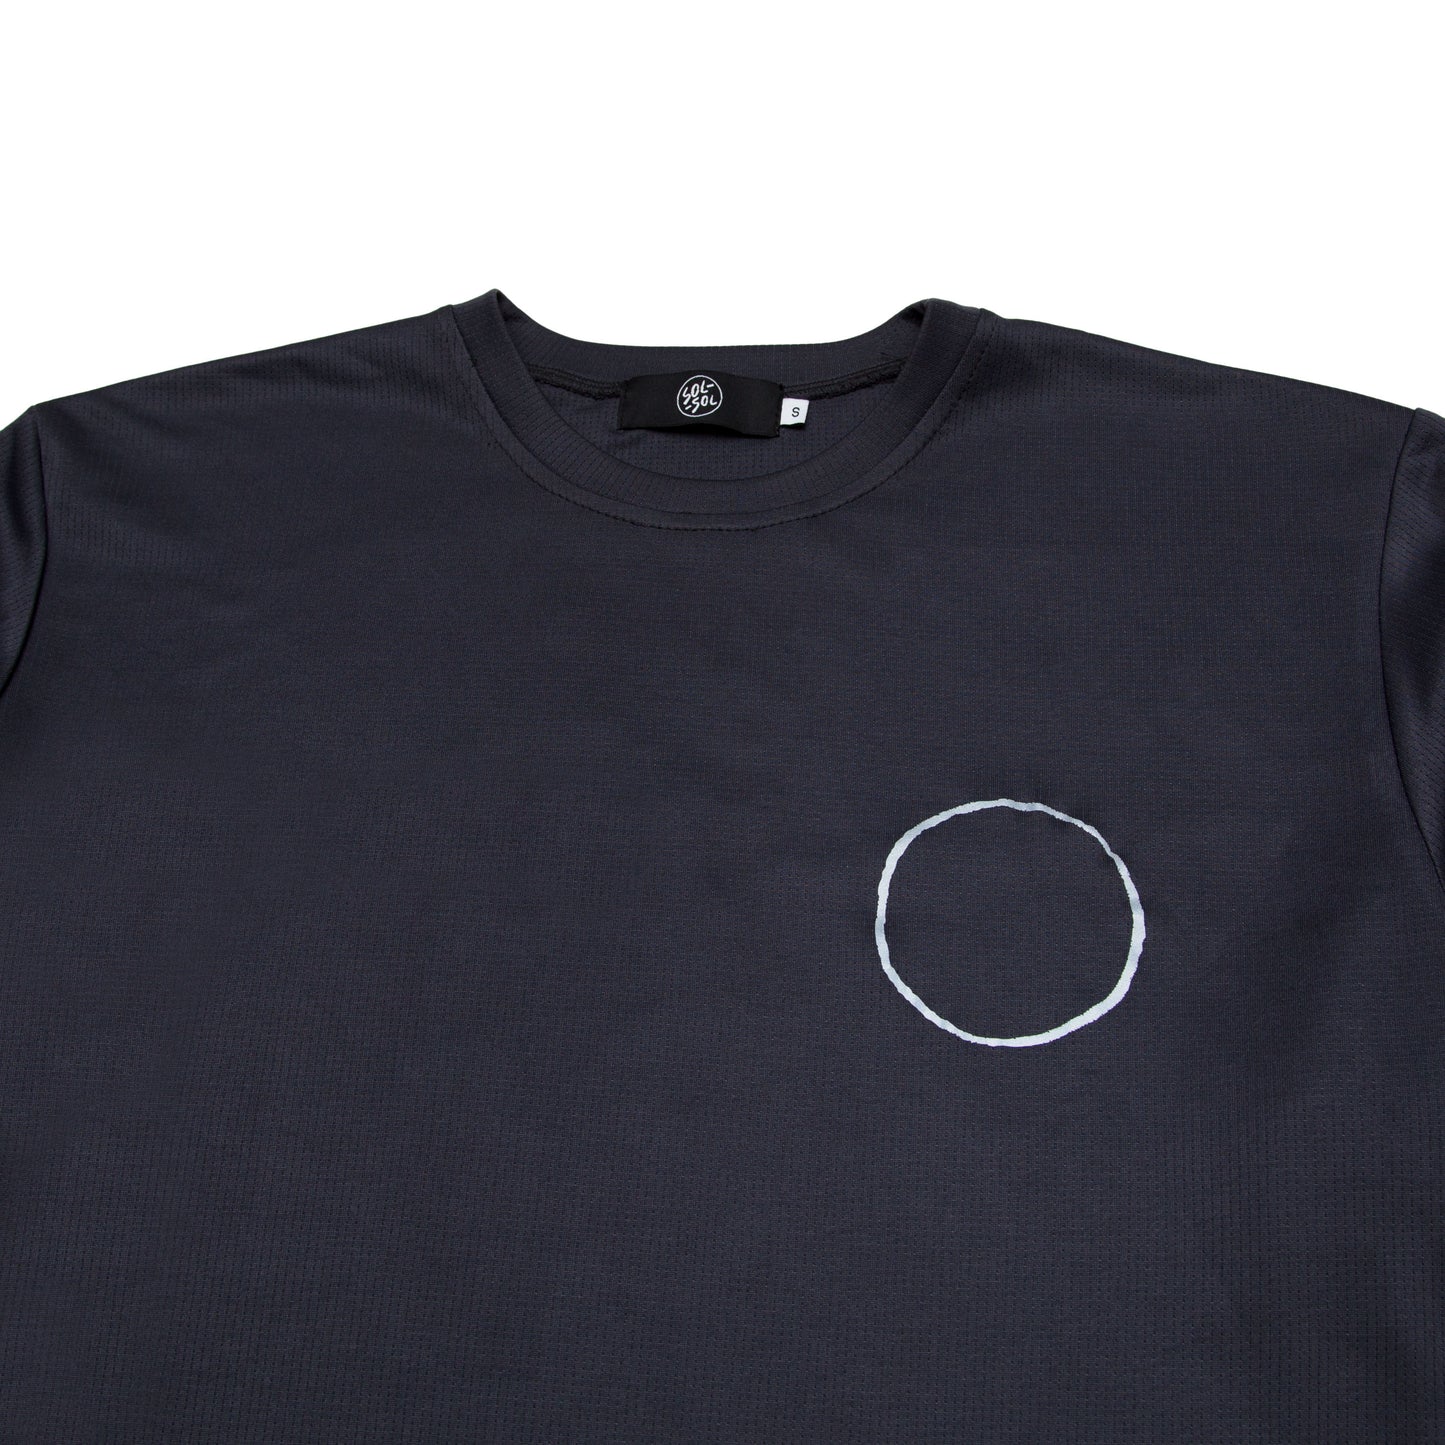 Sol Sol Long Sleeve Tech T-Shirt - Charcoal